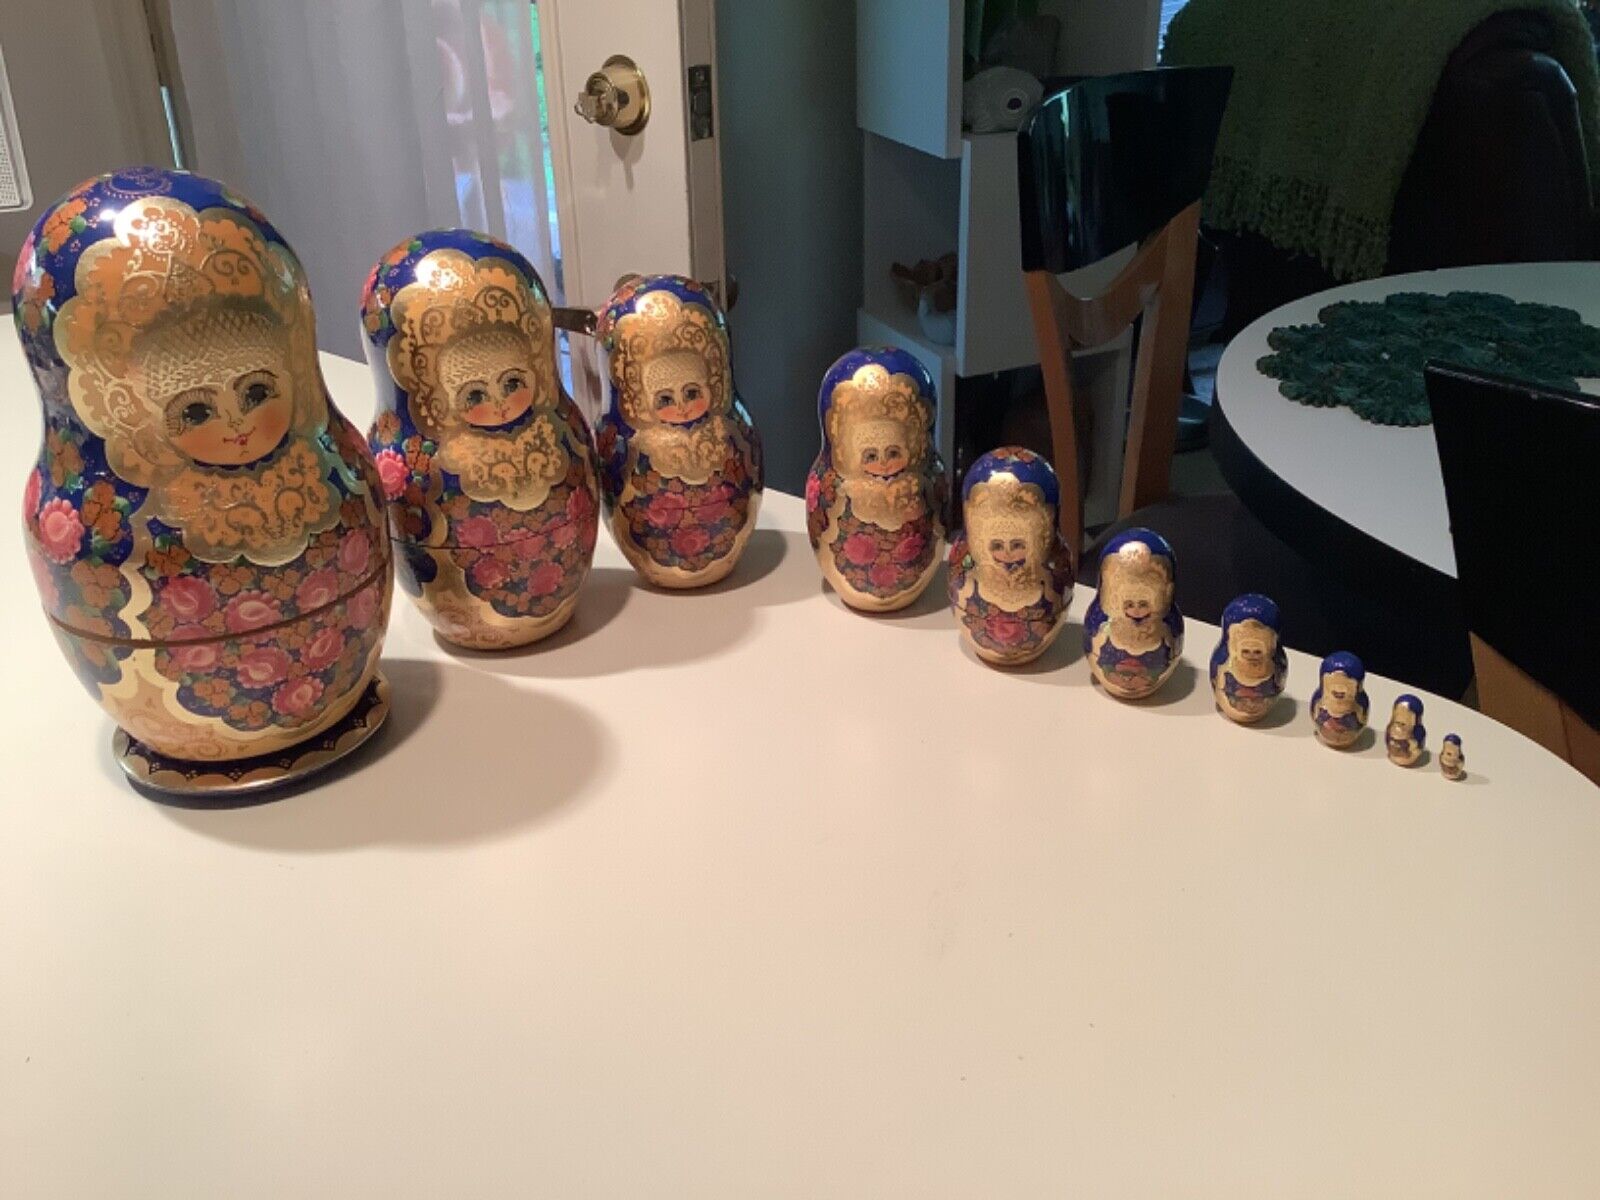 Vintage Large Russian Nesting Dolls Signed Ceprueb Nocag Set of 10 Colorful